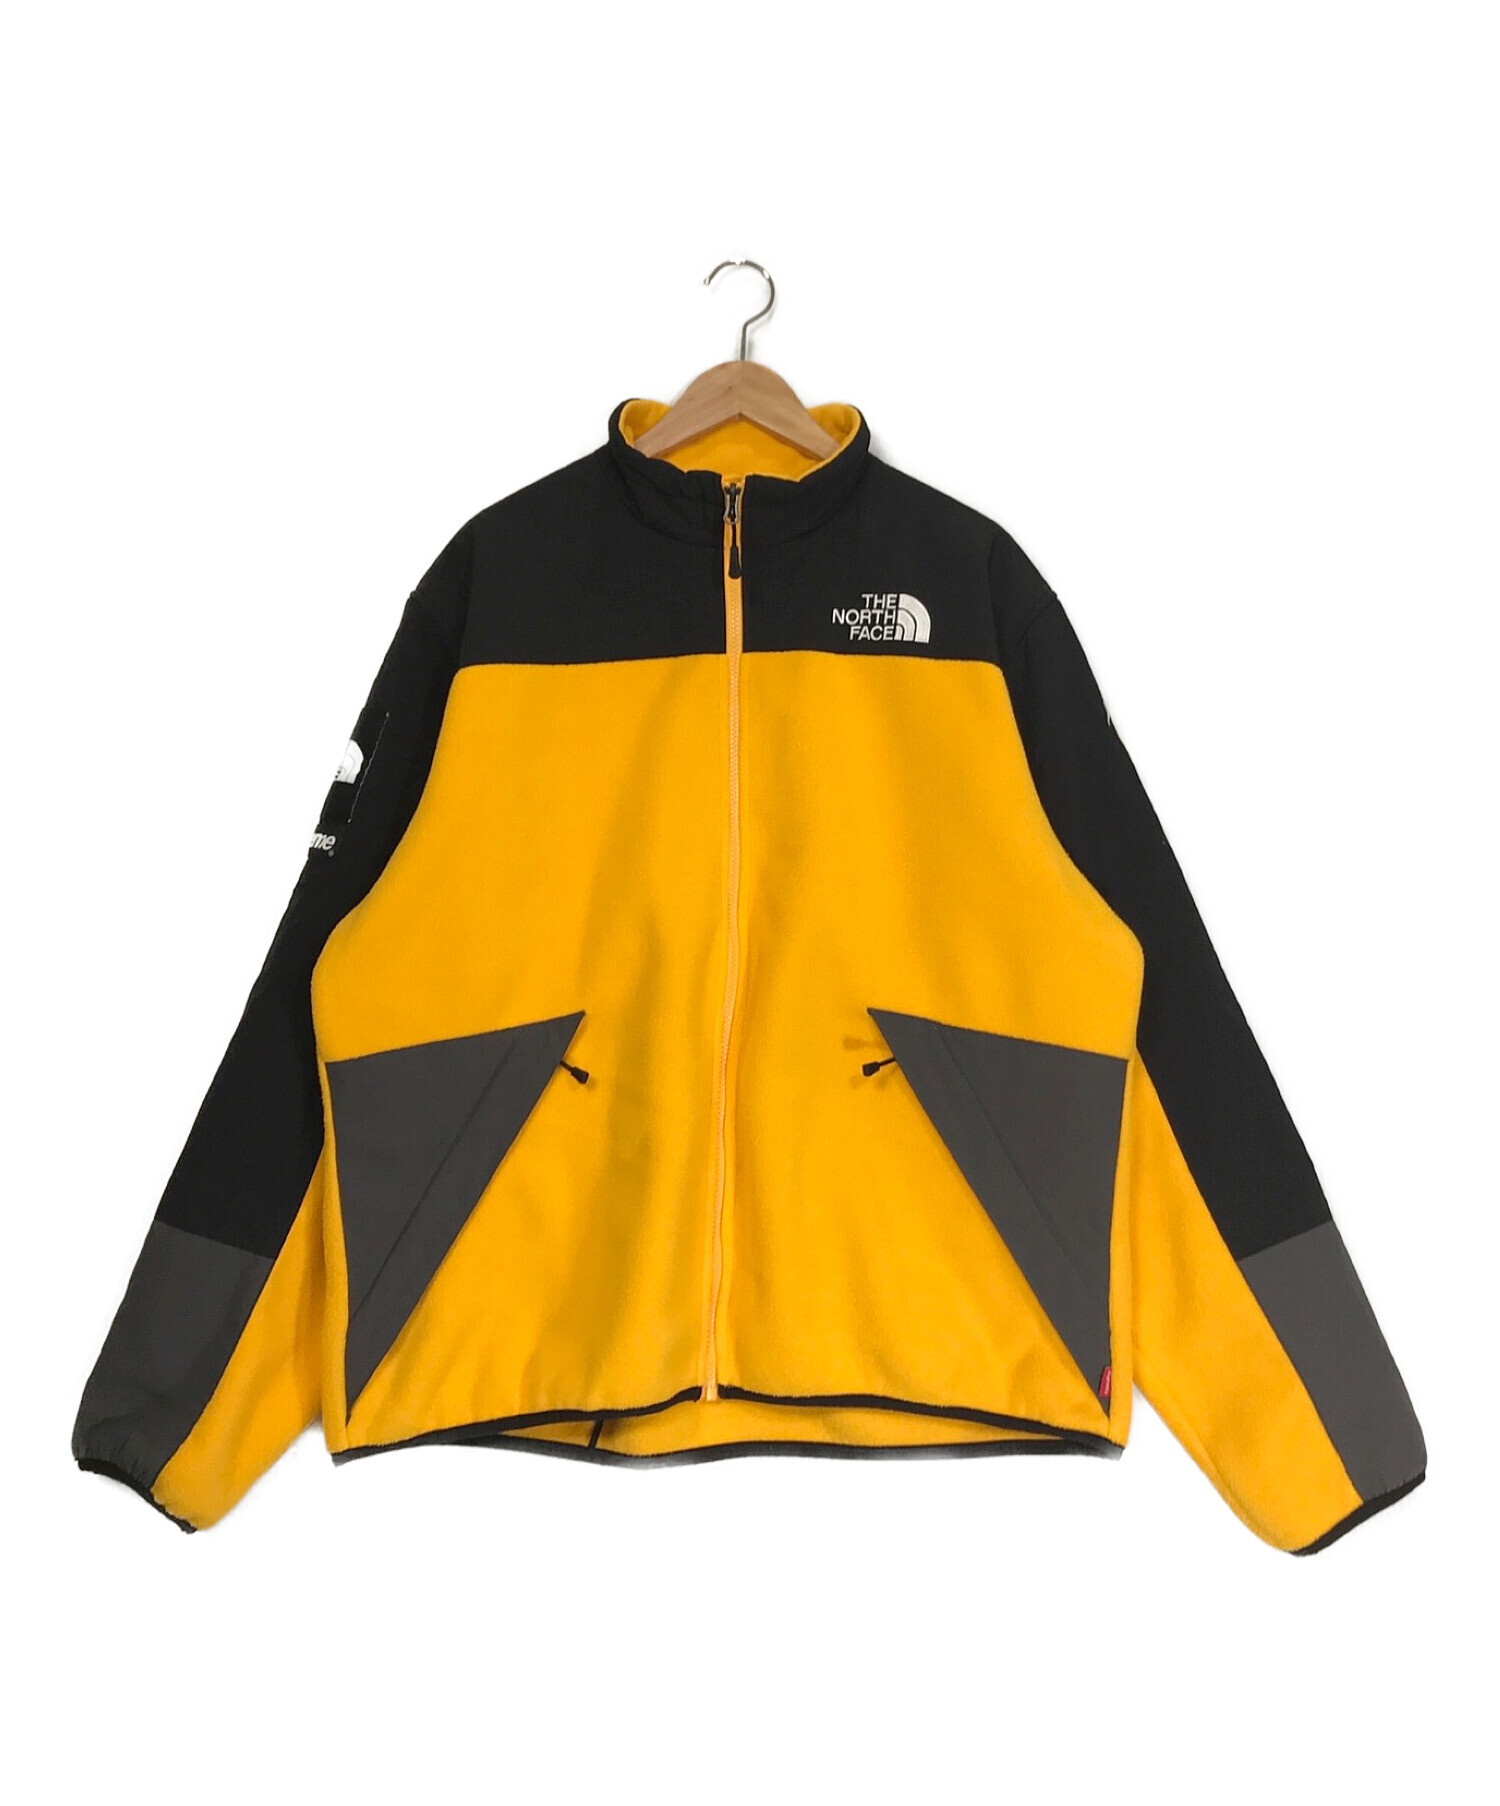 Supreme RTG Fleece Jacket Lサイズ